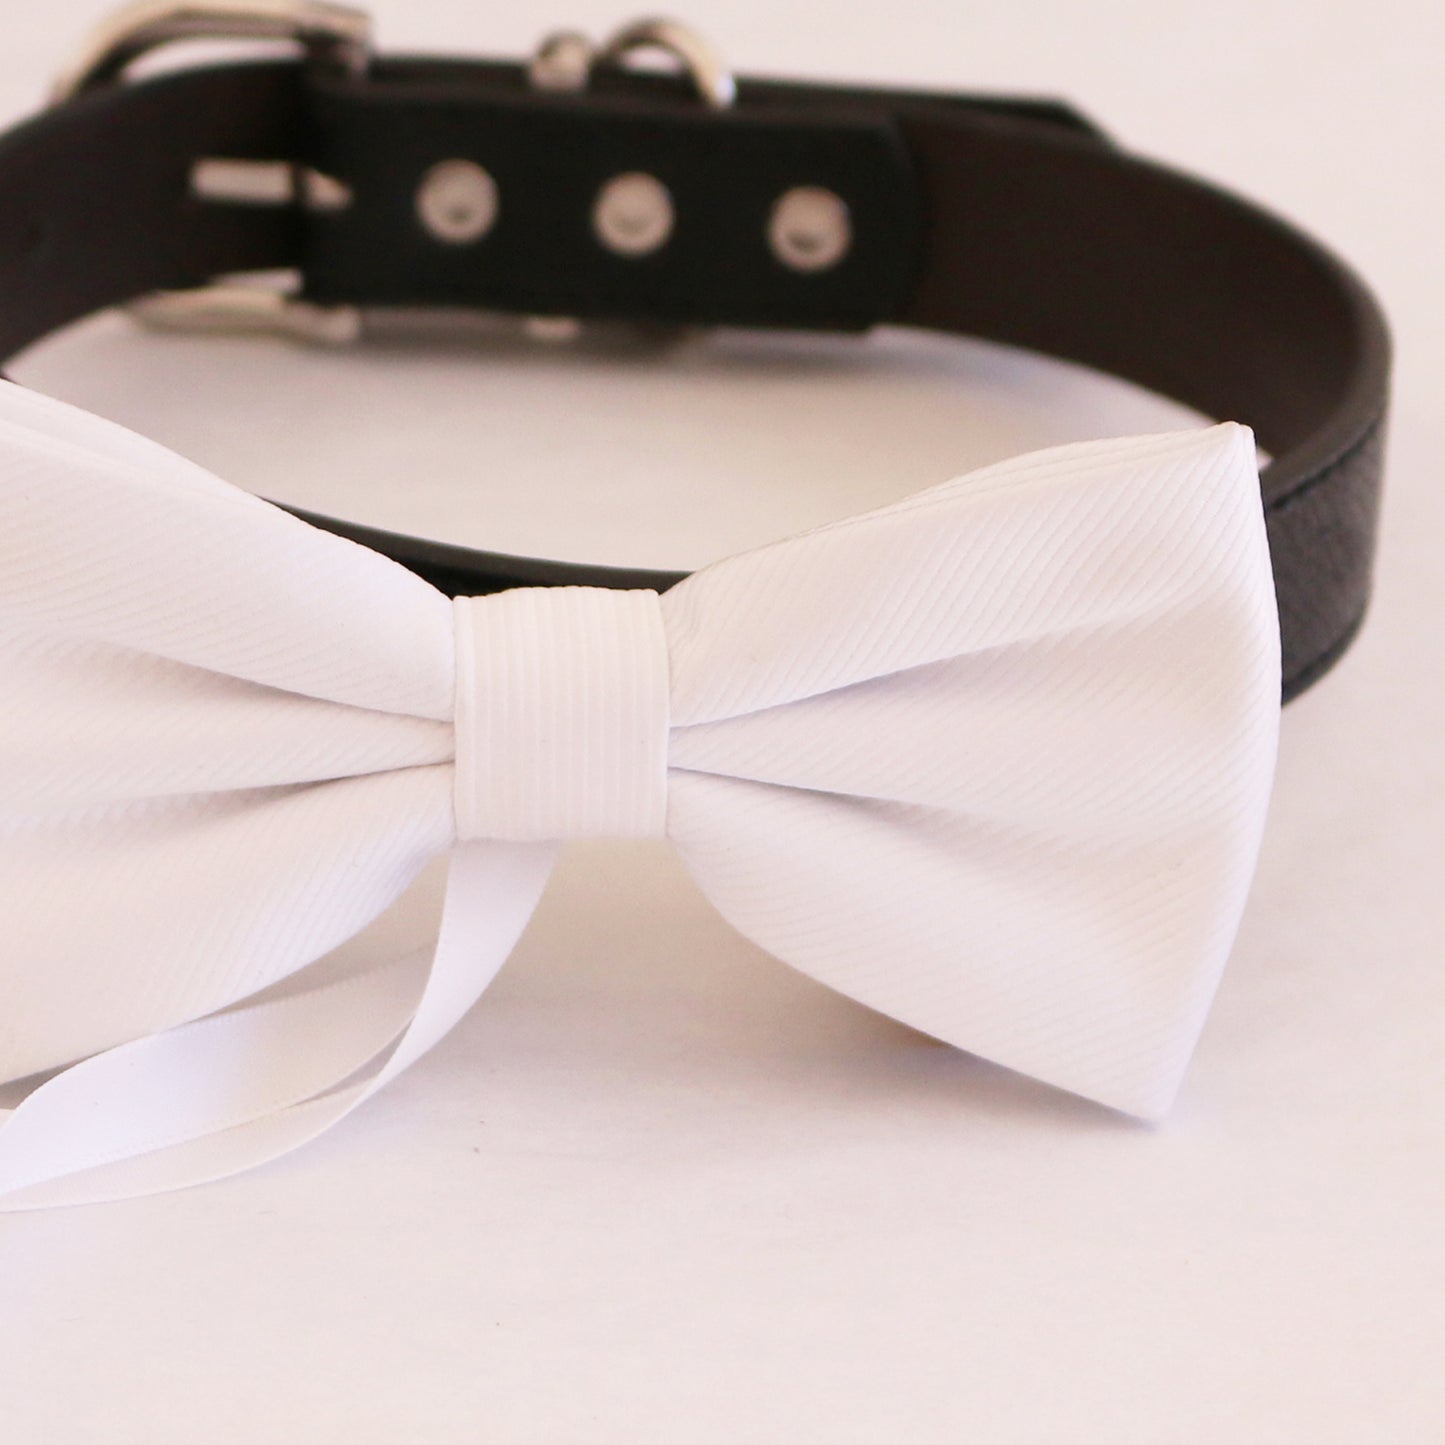 White bow tie collar Leather collar Dog ring bearer ring bearer adjustable handmade XS to XXL collar bow, Puppy, Proposal , Wedding dog collar